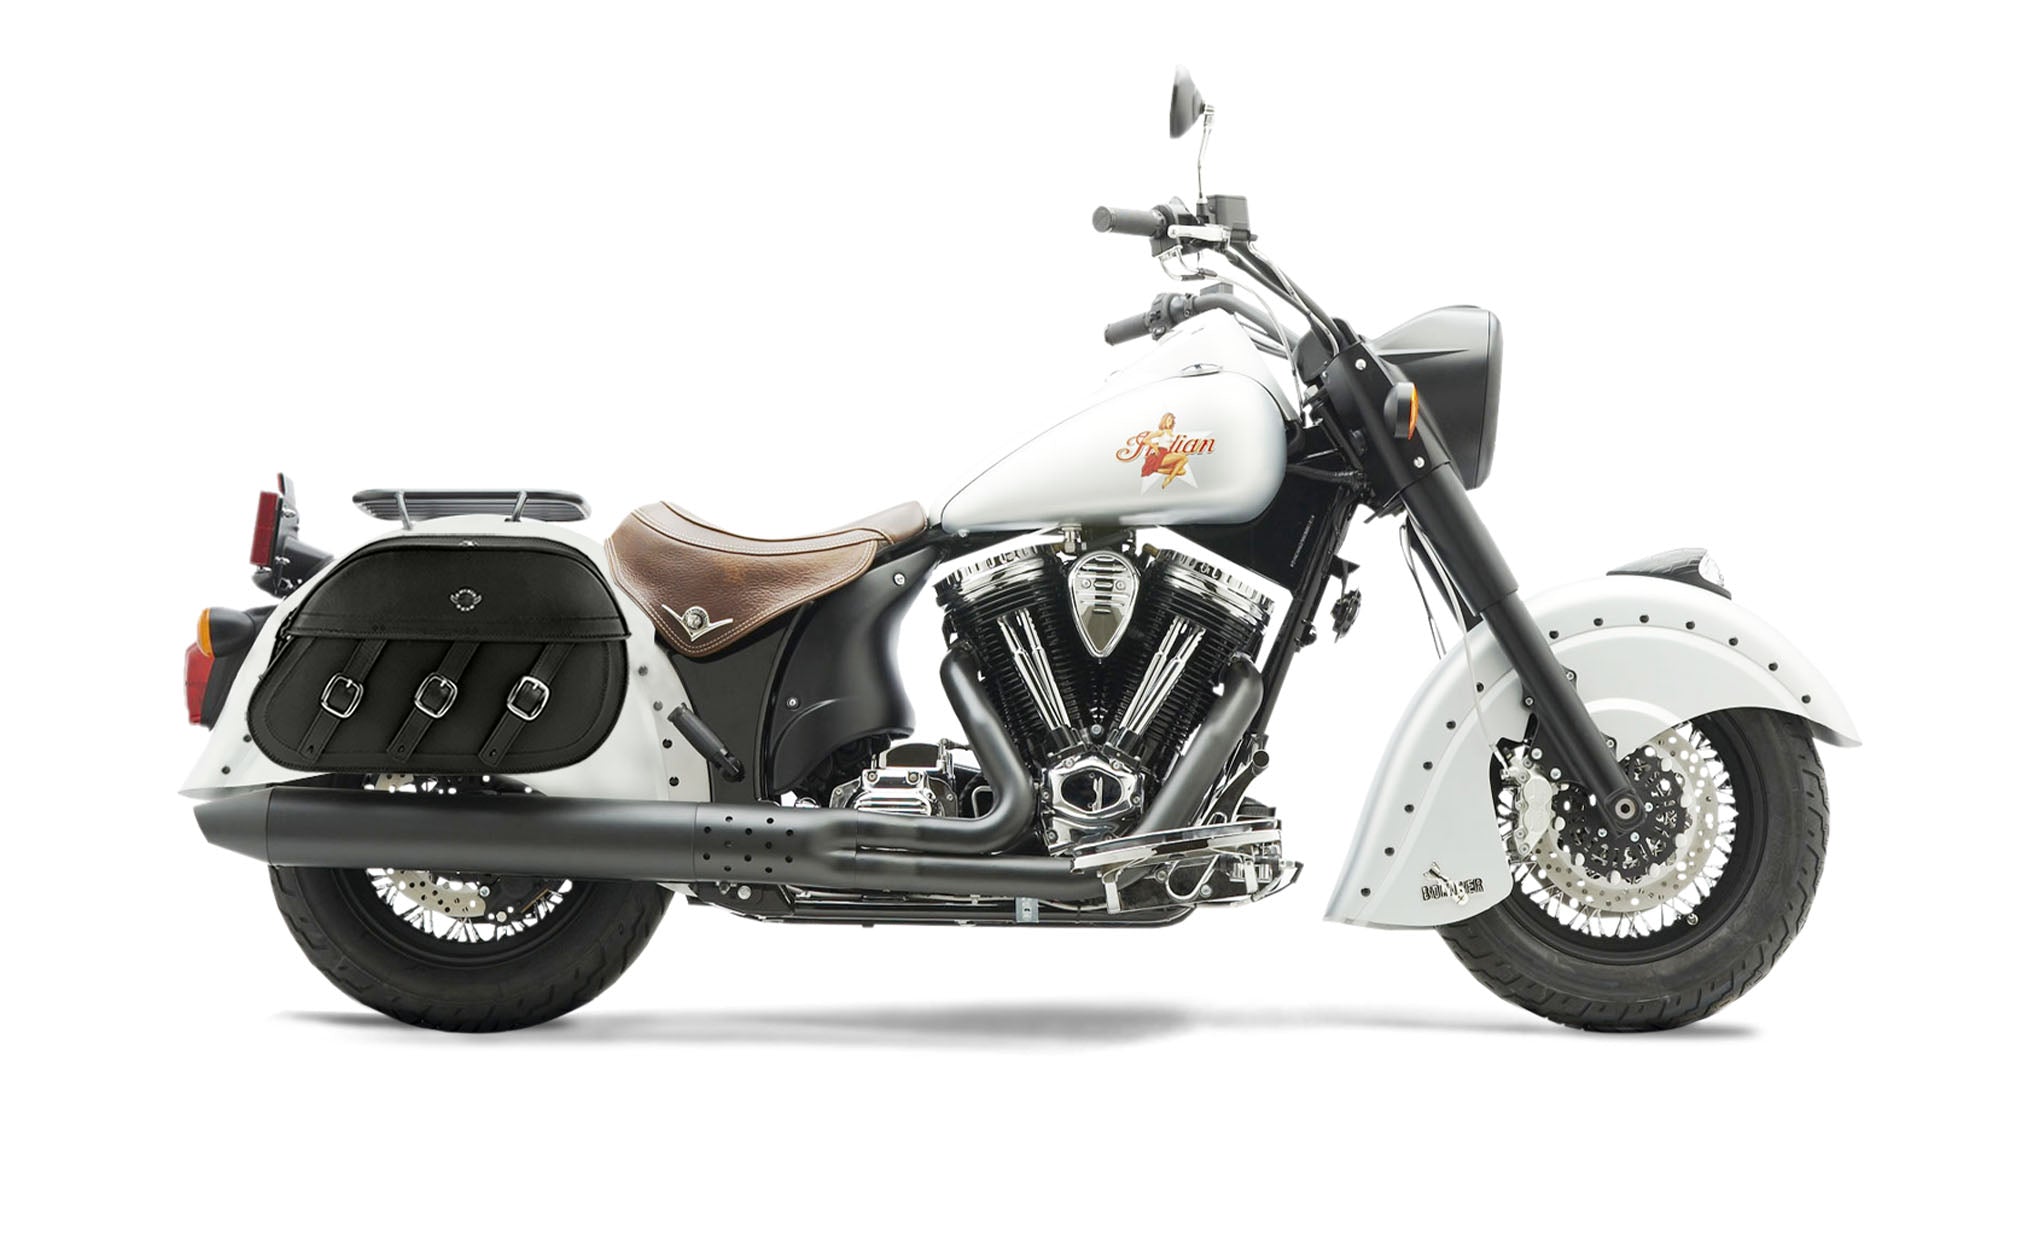 Viking Trianon Extra Large Indian Chief Bomber Leather Motorcycle Saddlebags on Bike Photo @expand